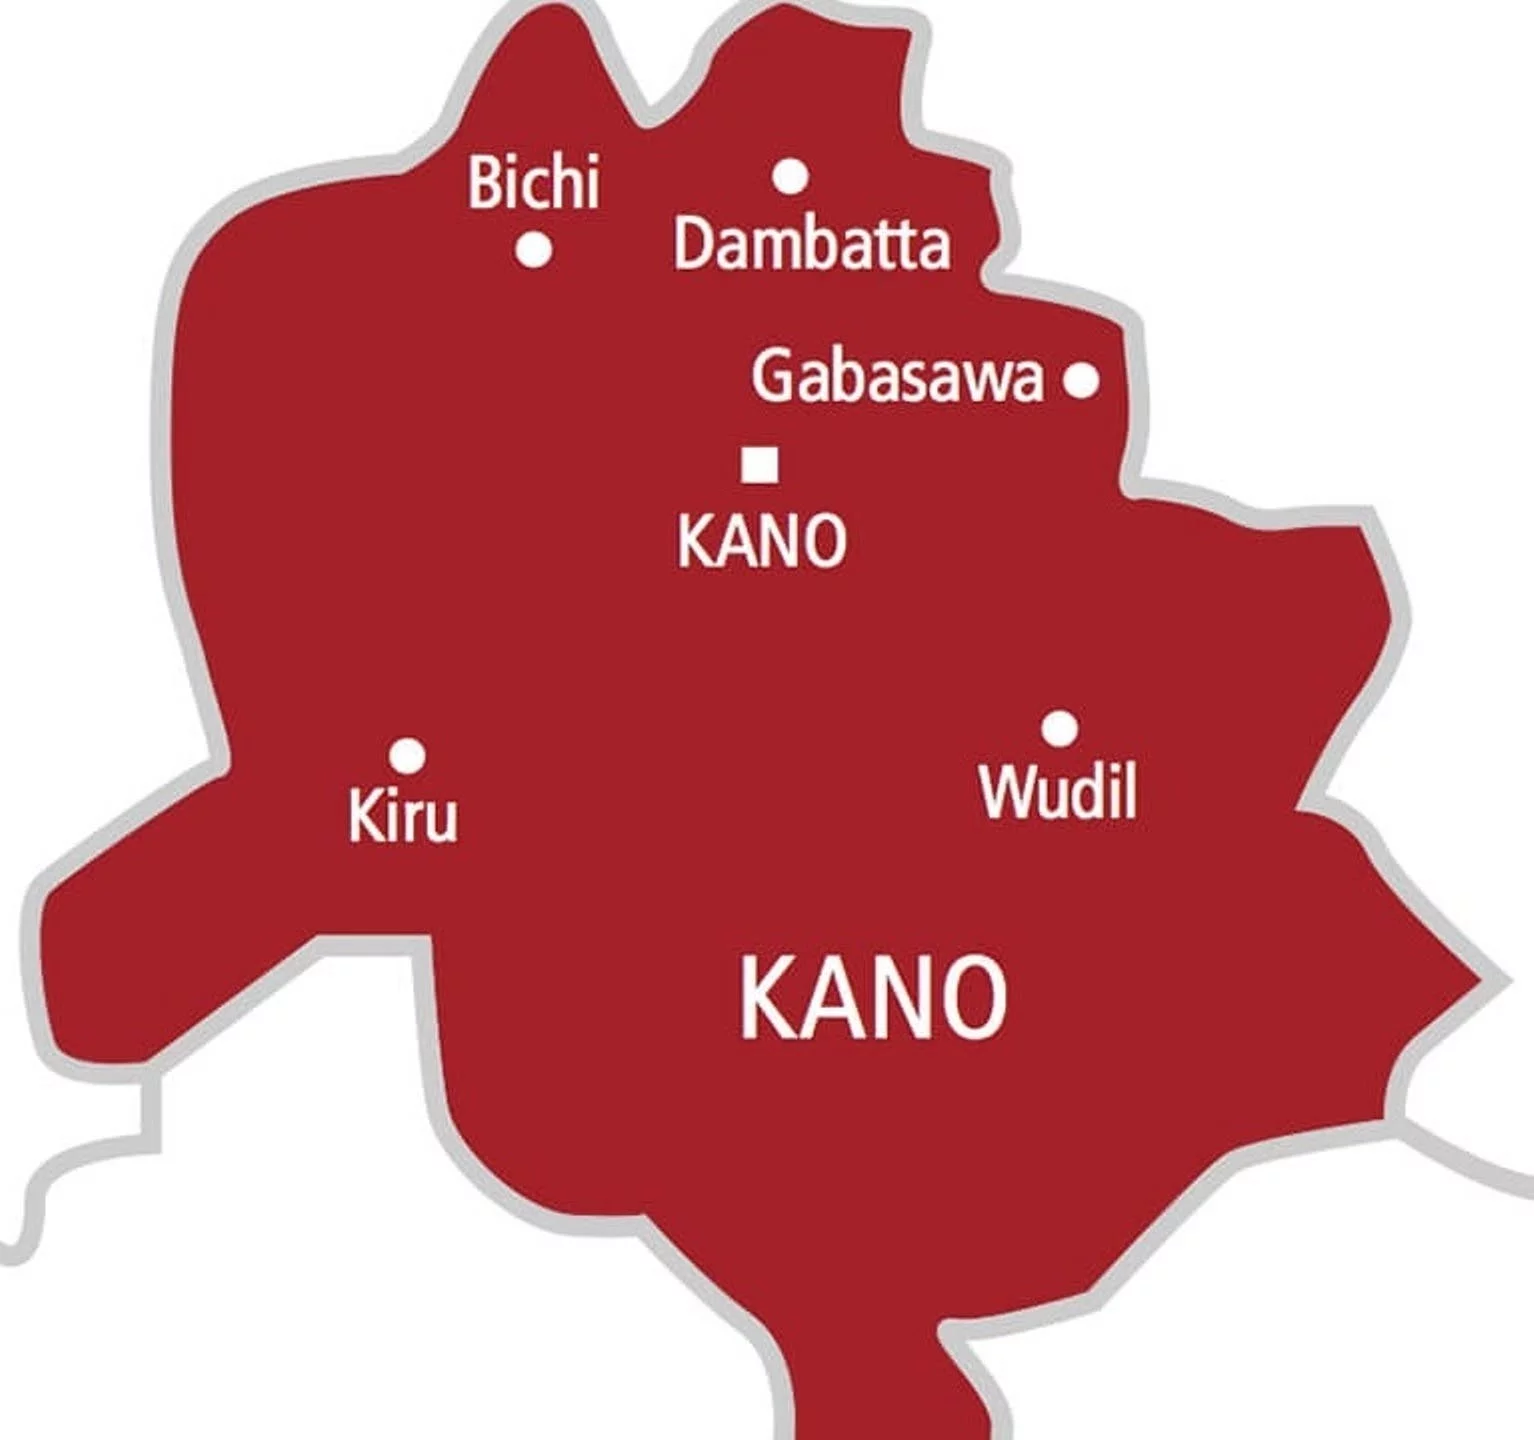 Three killed as rival gangs clash in Kano